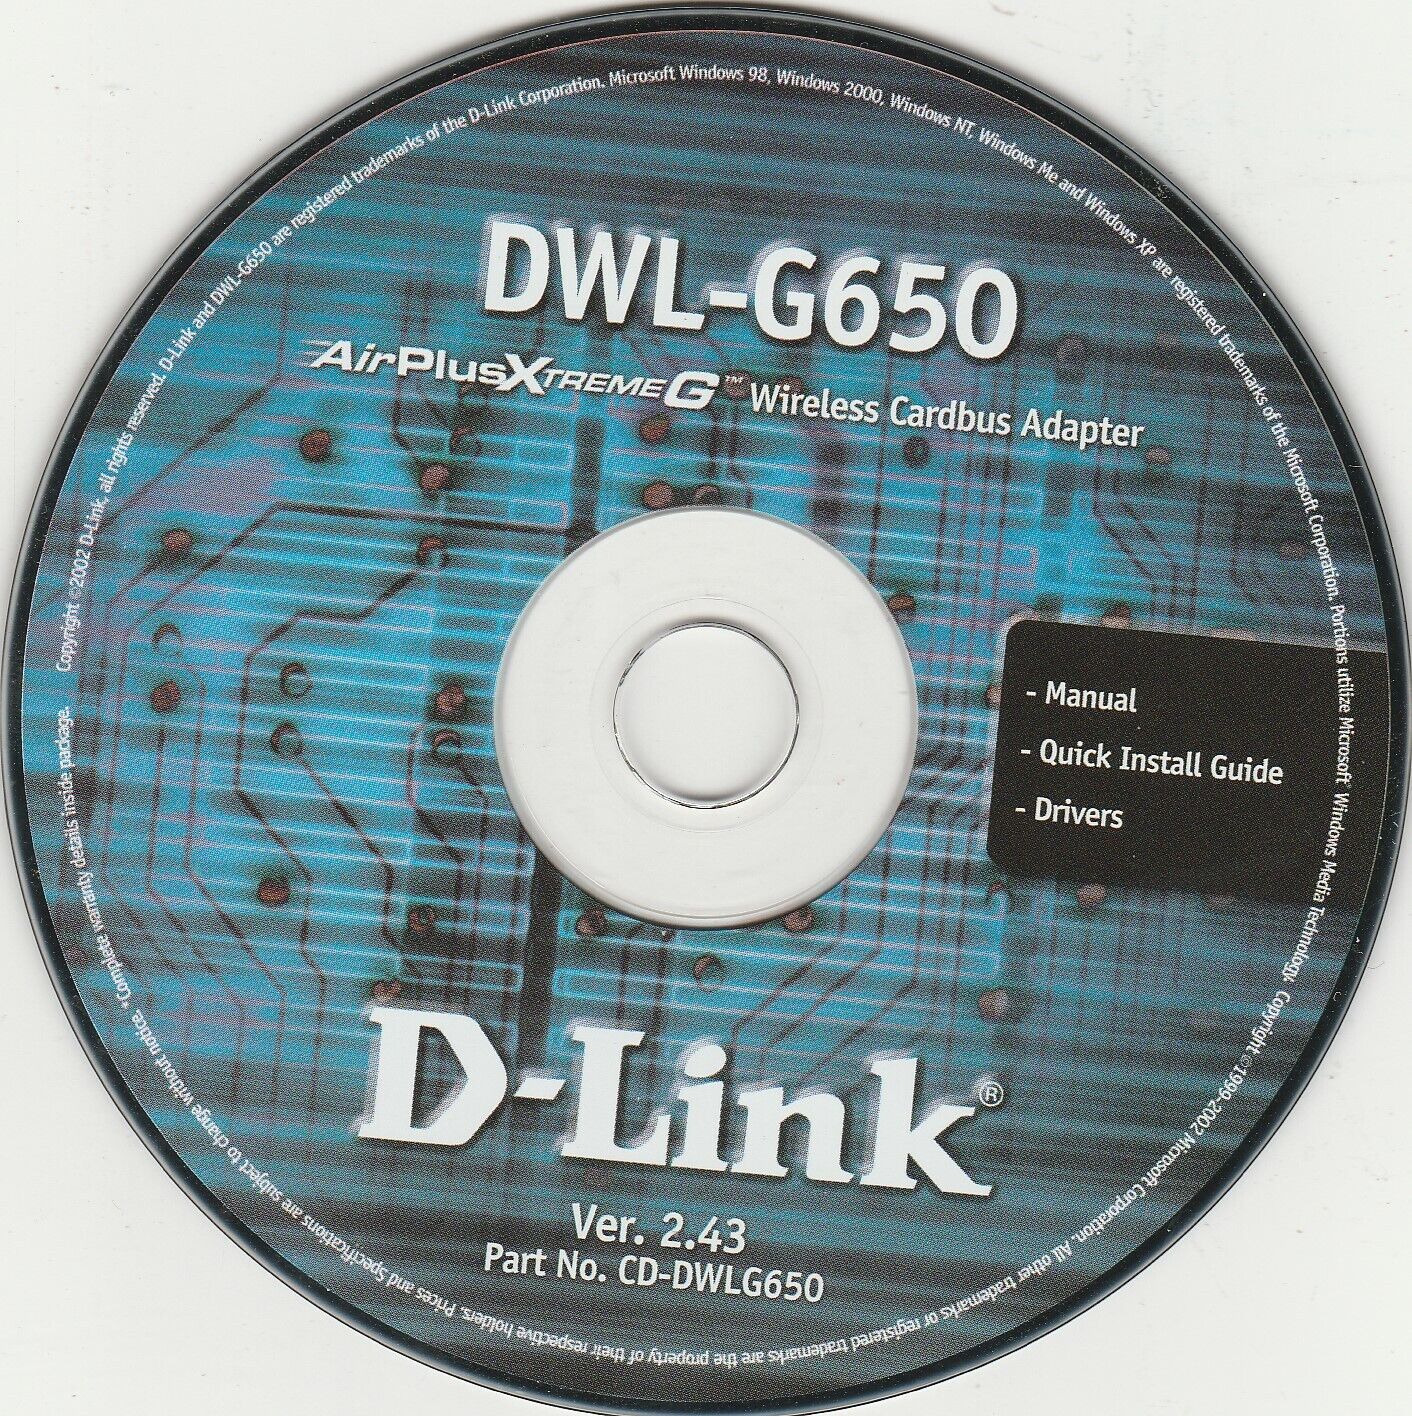 DWL-G650 AirPlusXtremeG Wireless Cardbus Adapter Ver. 2.43 PC...